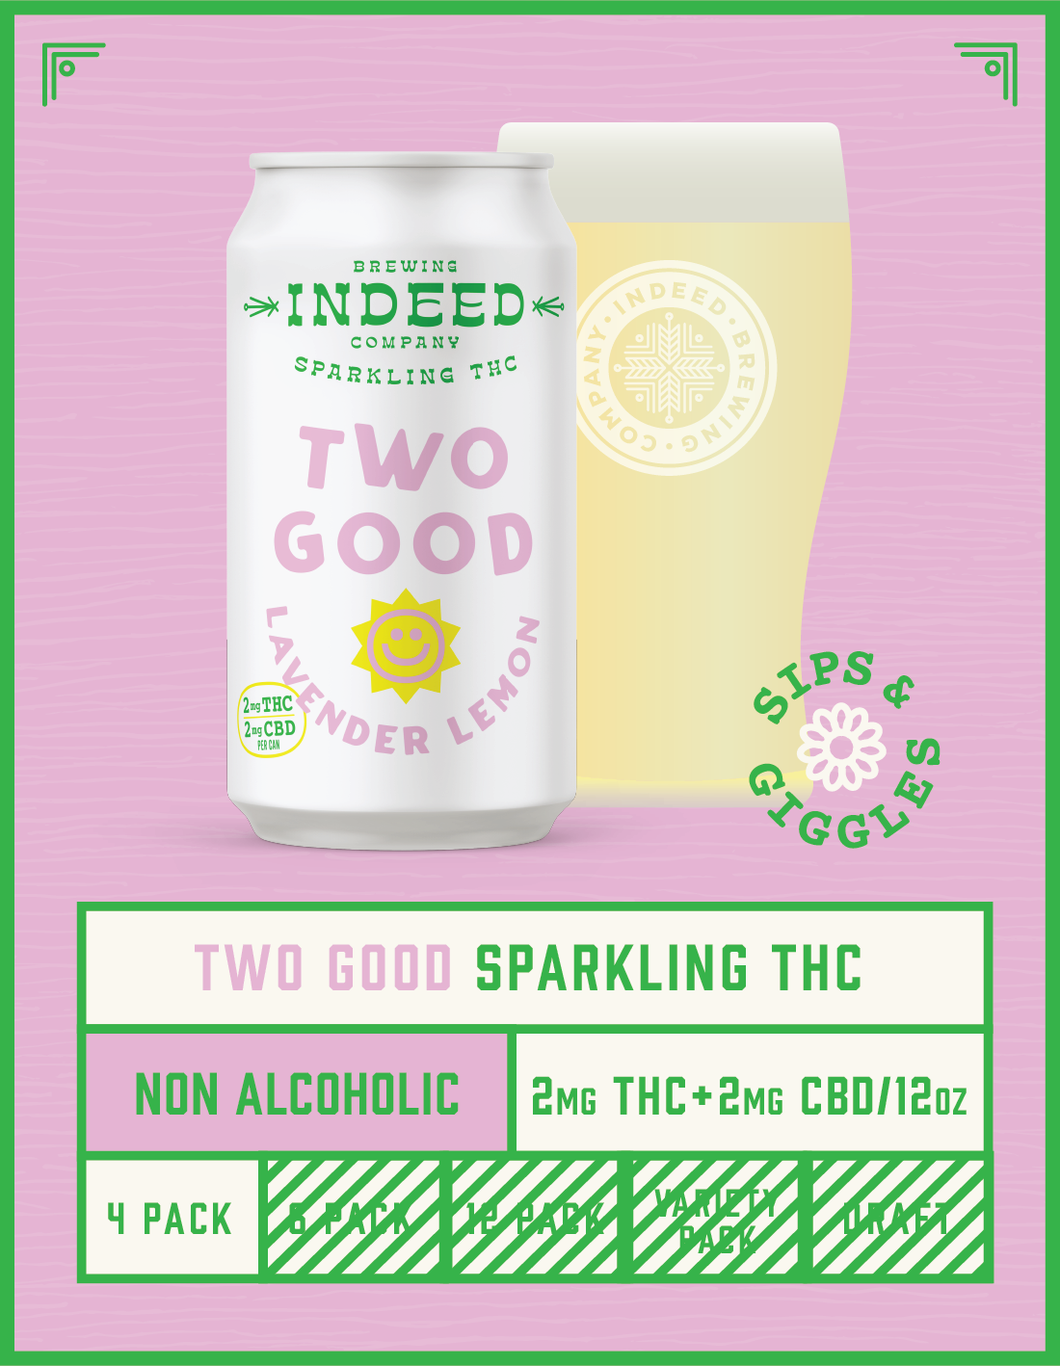 Two Good Lavender Lemon - 2mg THC/2mg CBD 12oz 4-packs